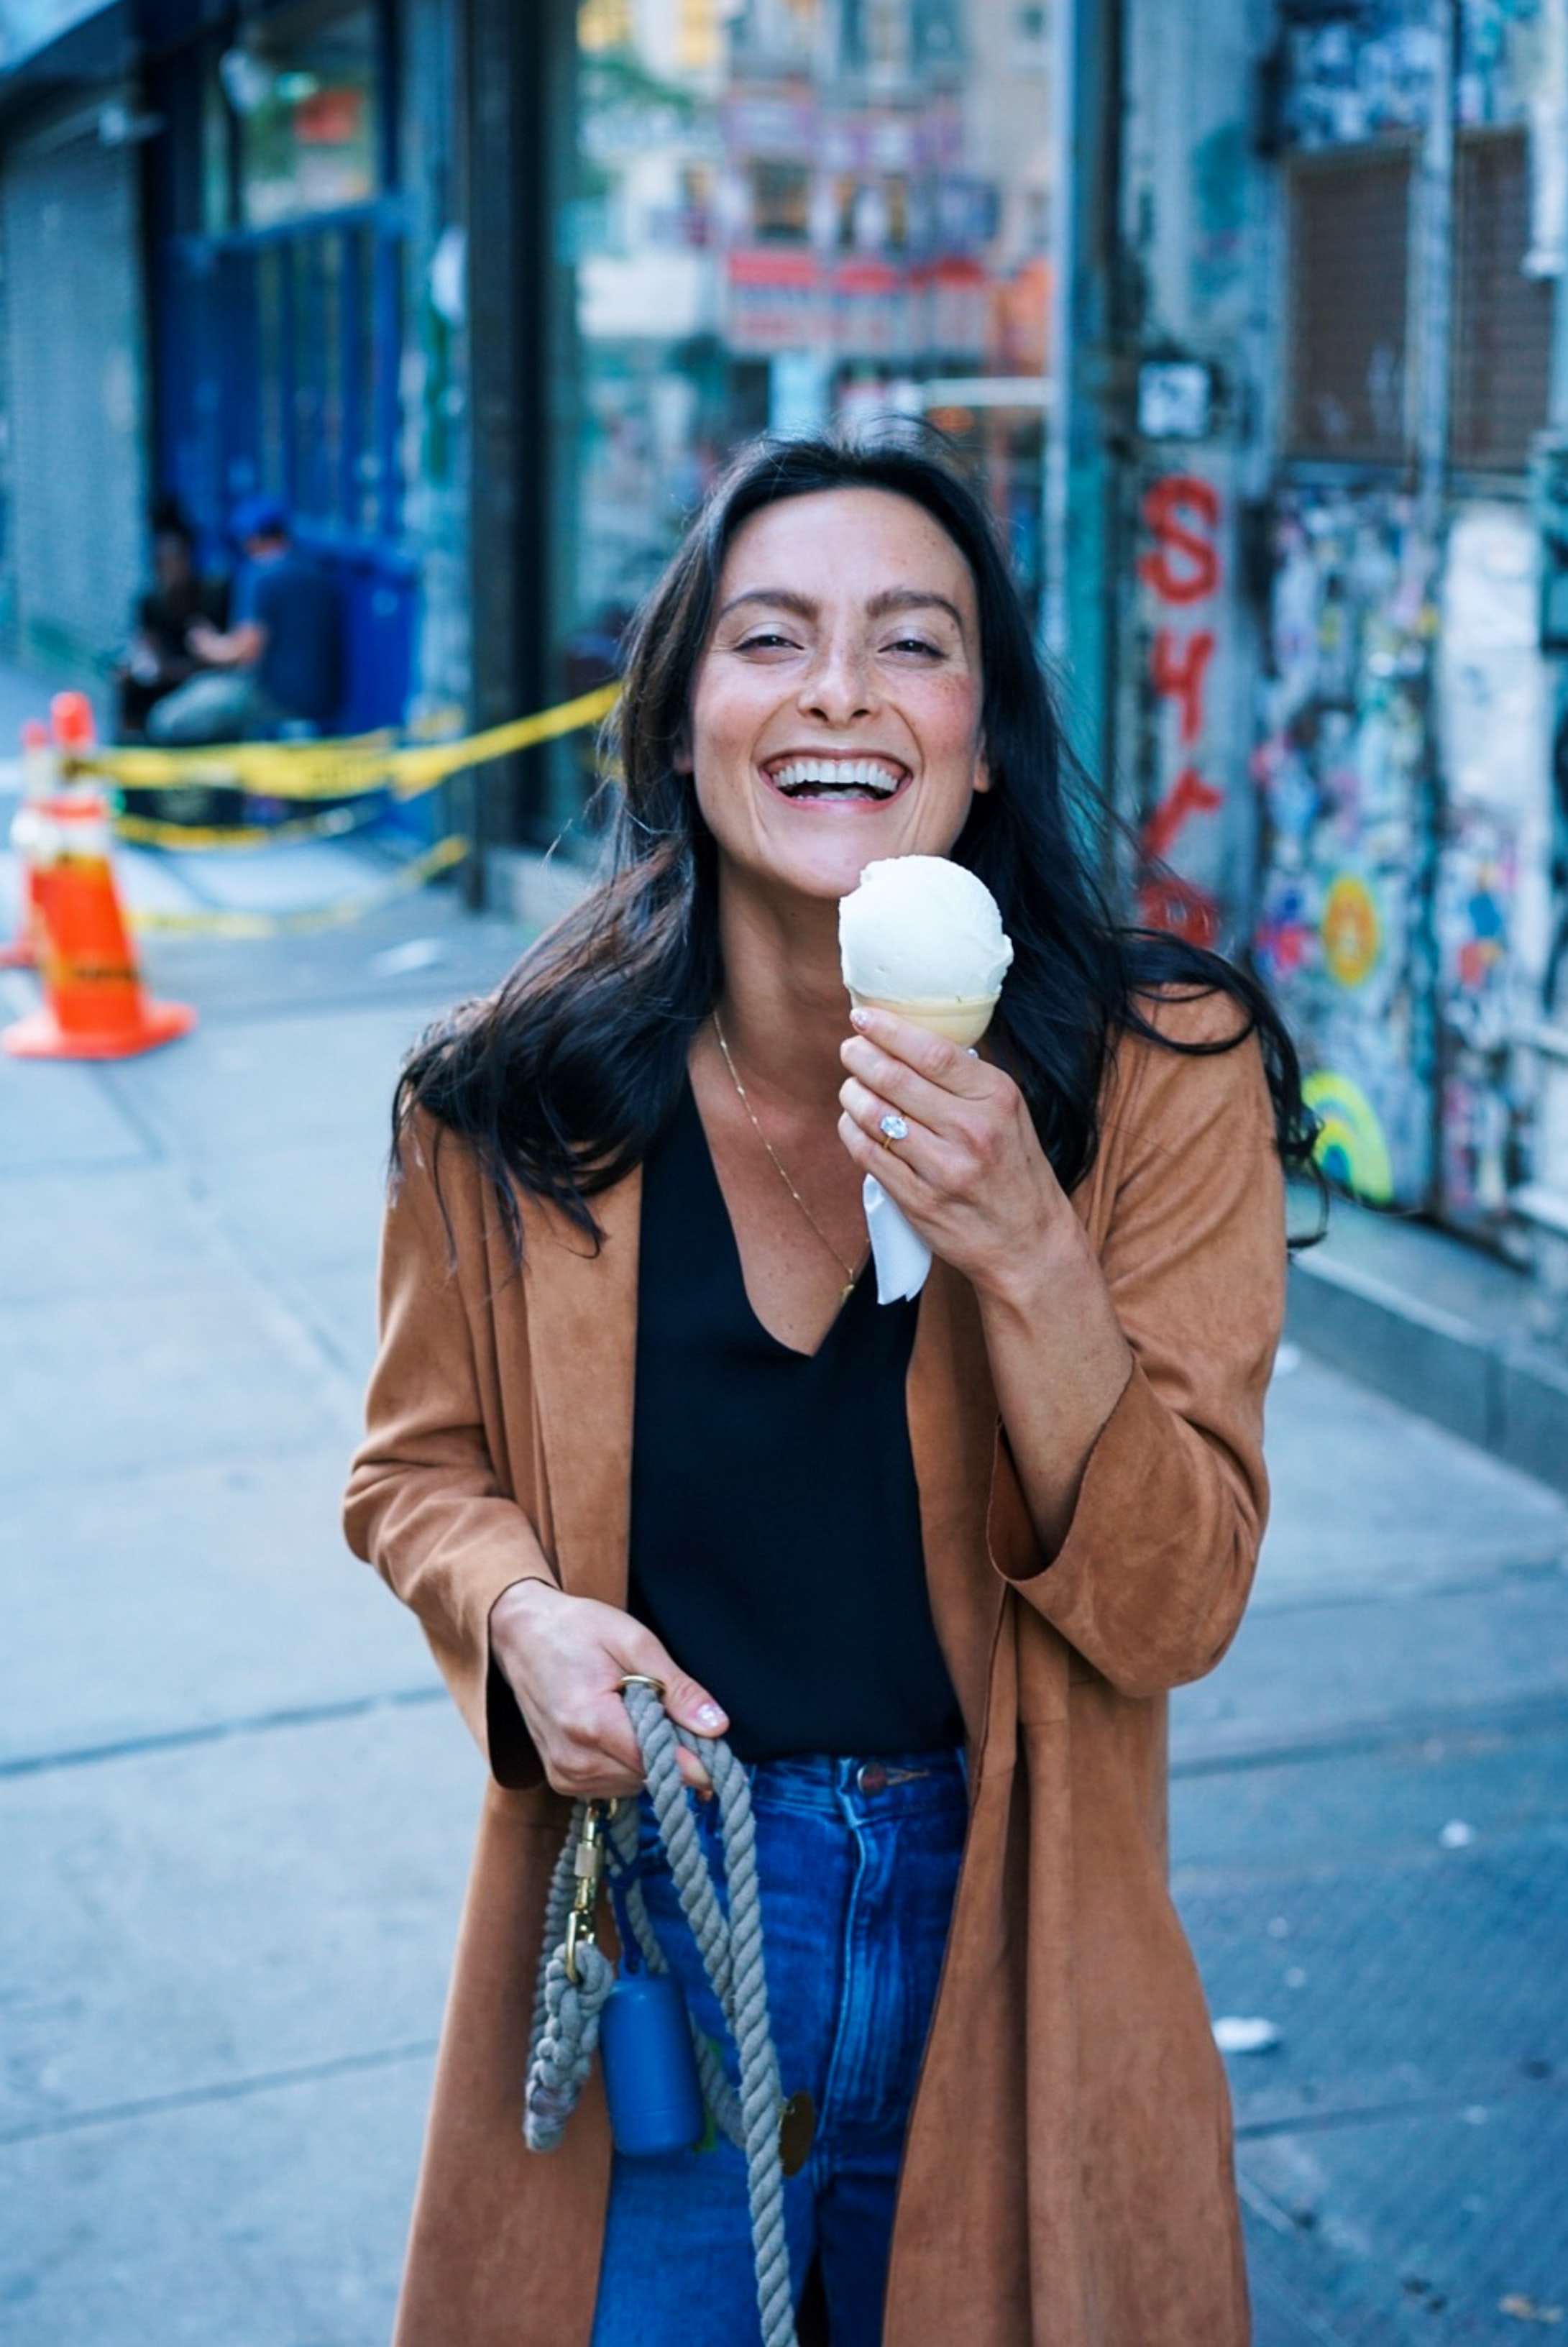 woman-eating-ice-cream-in-street